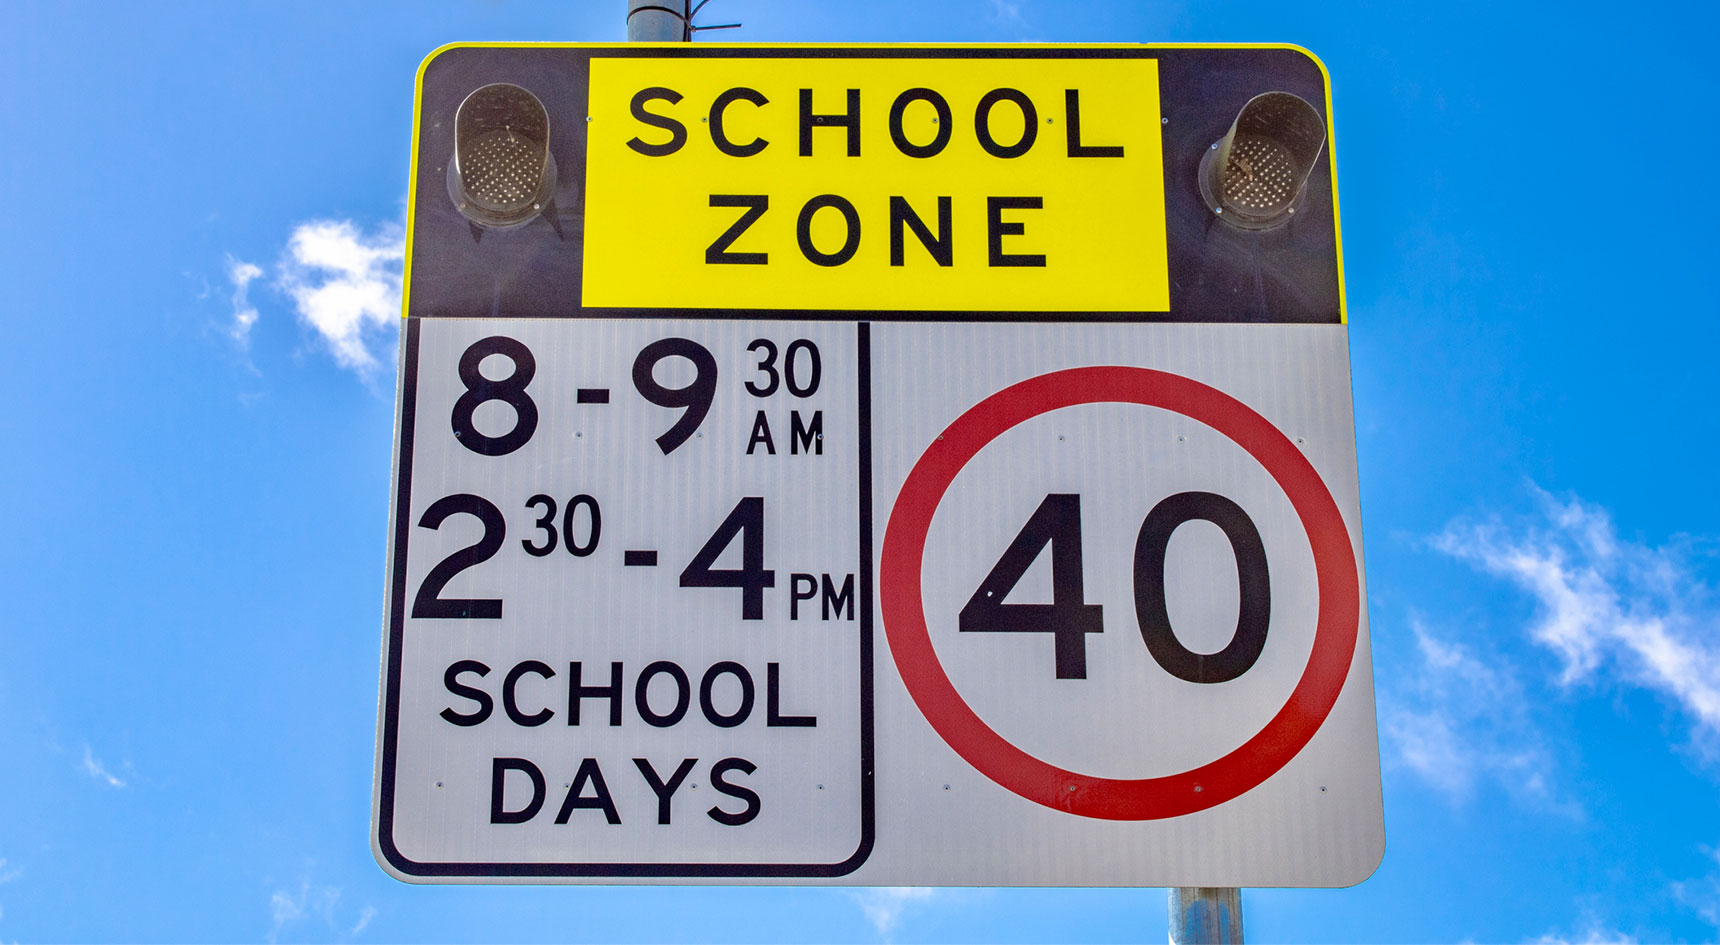 Sign: School zone. 8-9:30am, 2:30-4pm school days: 40